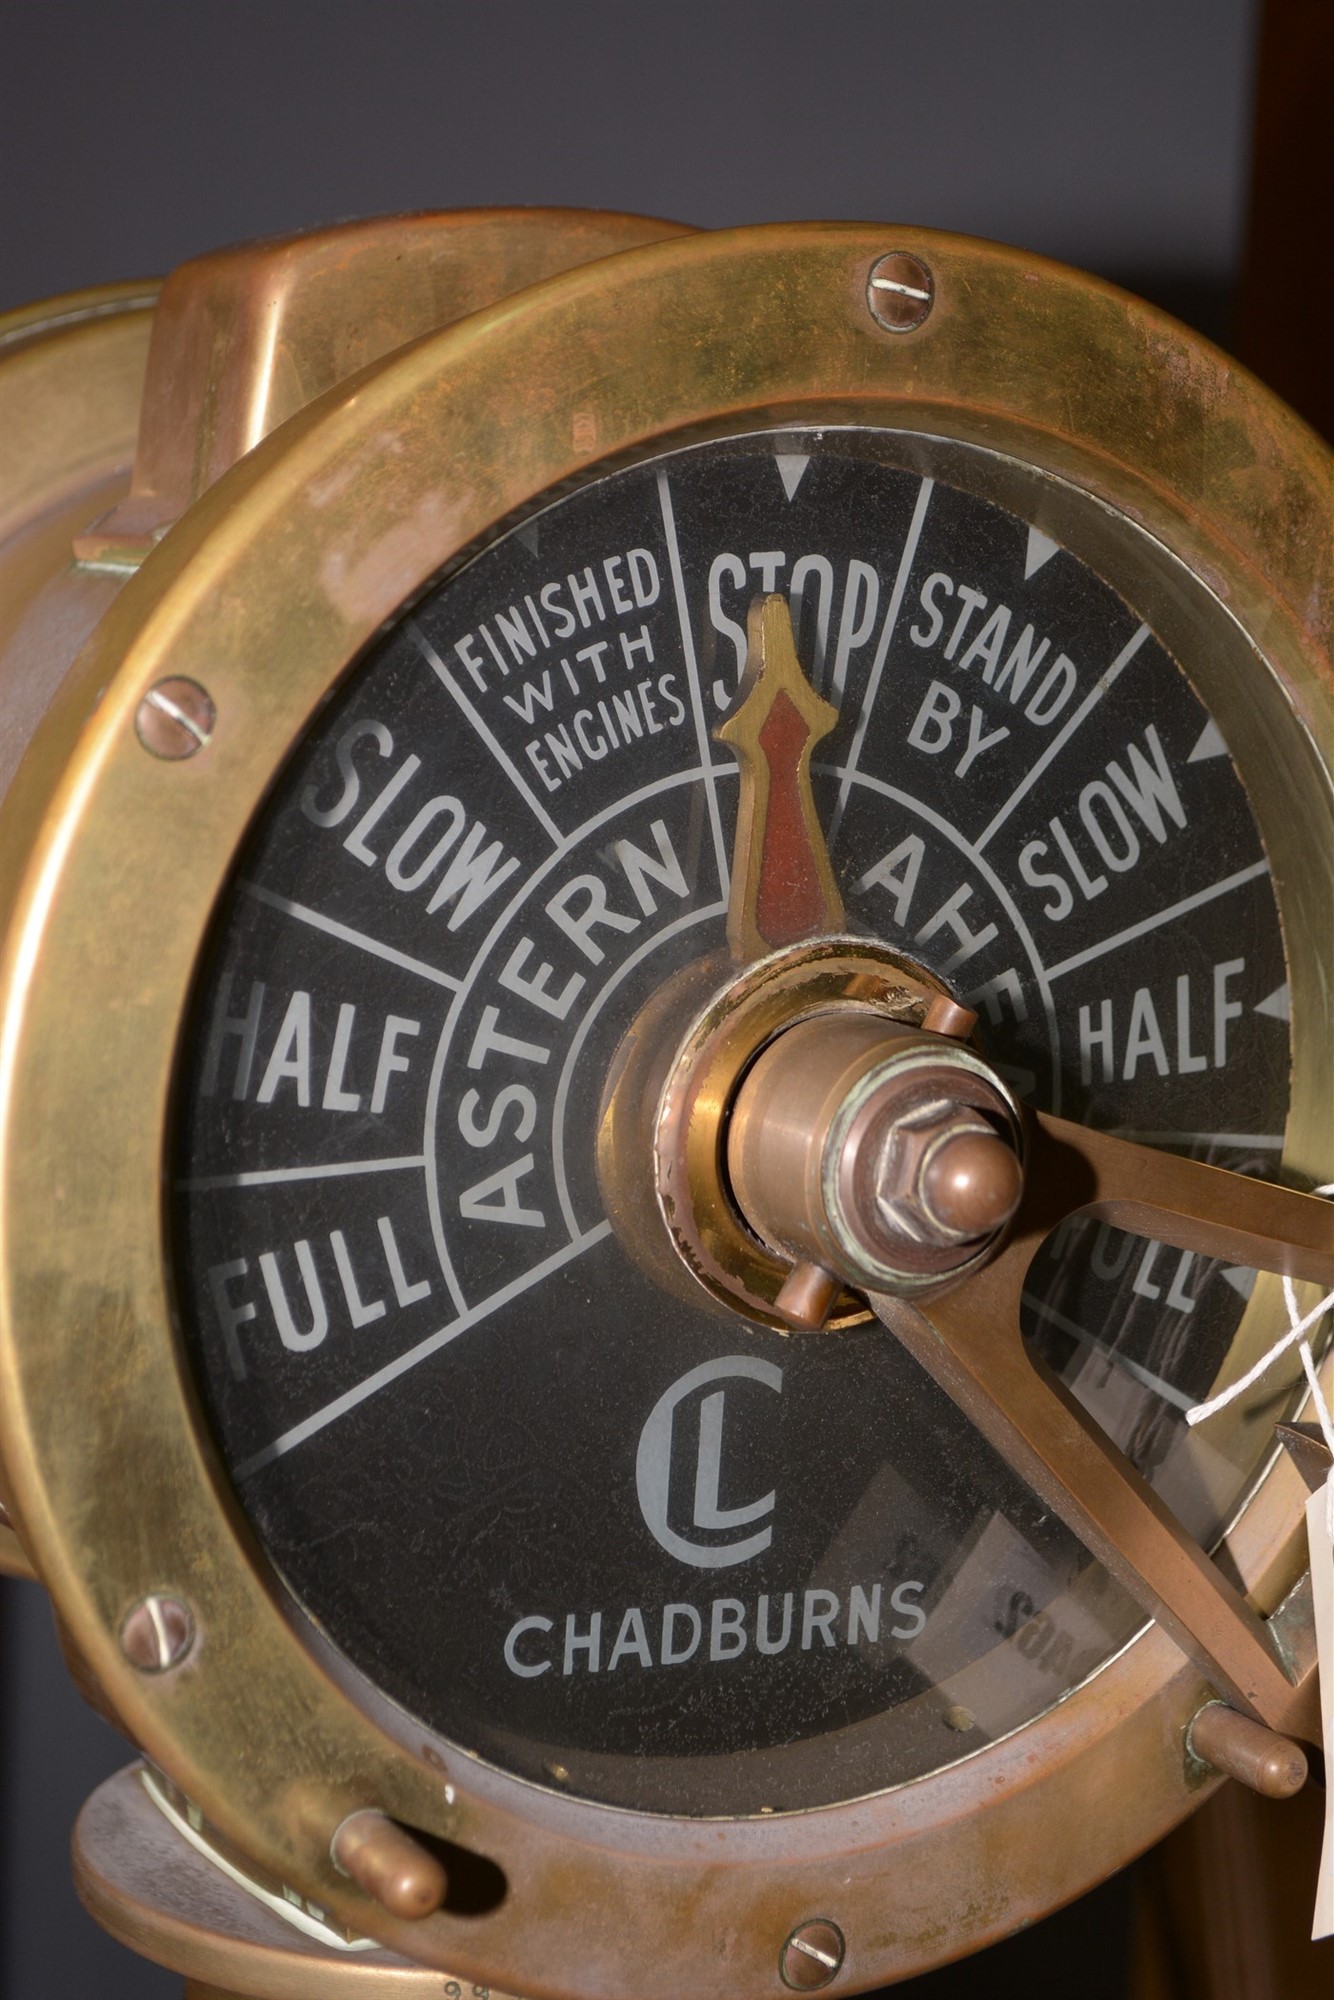 Chadburns ships telegraph - Image 2 of 8